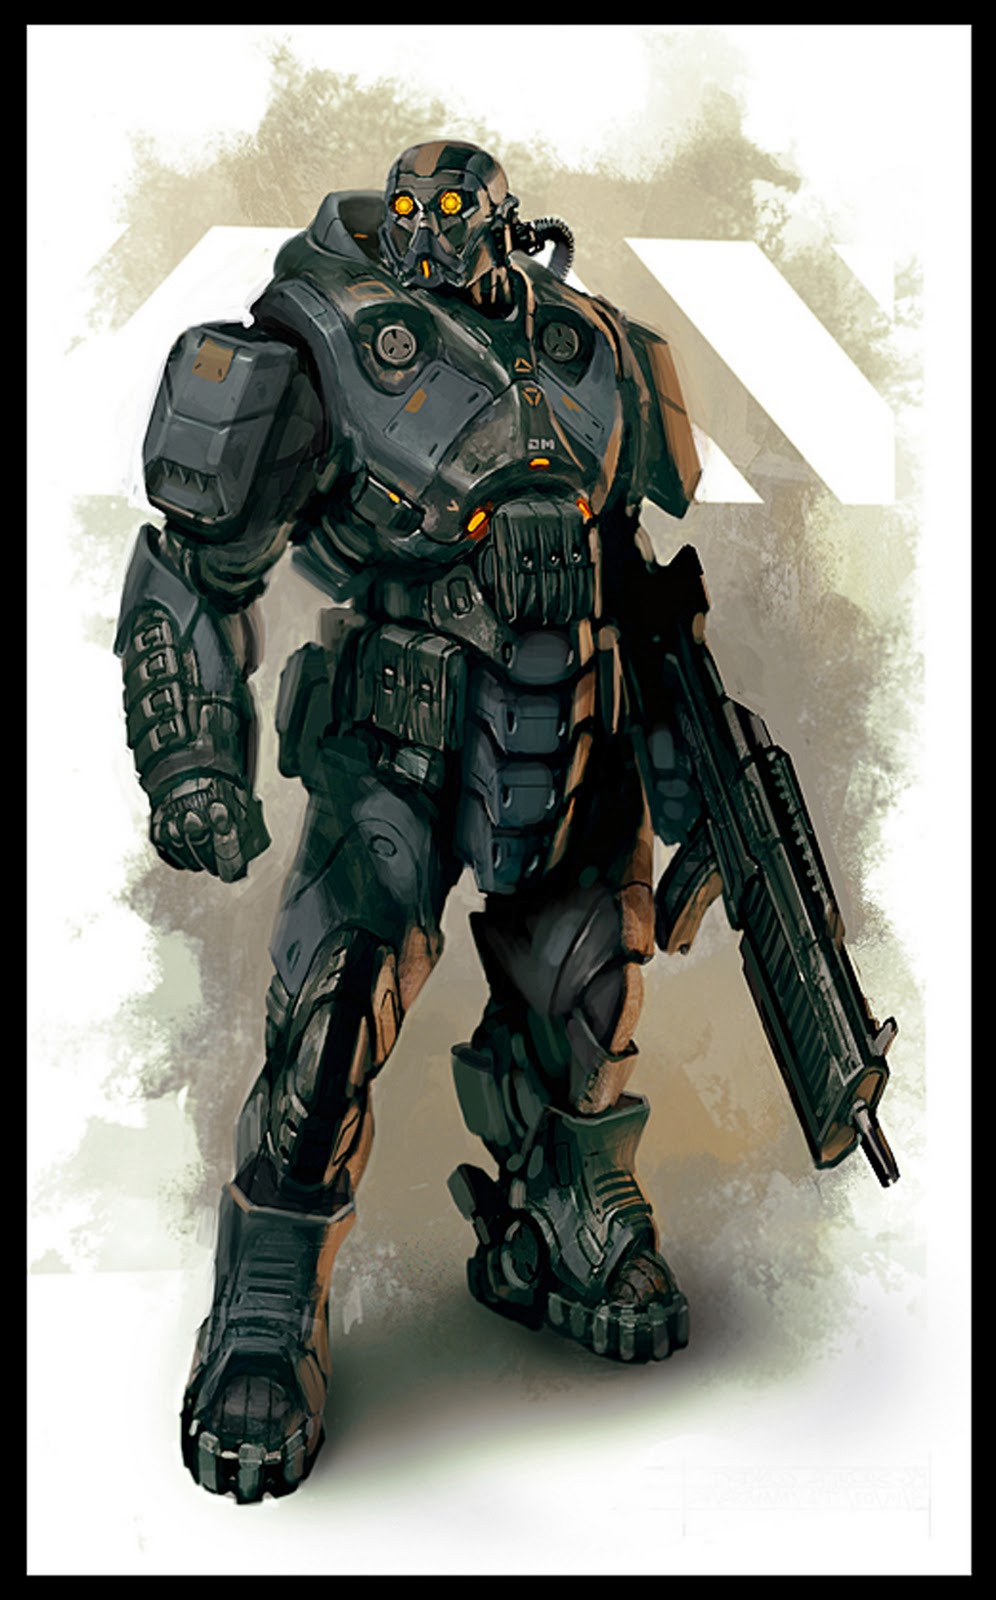 IMG:https://2.bp.blogspot.com/-s1HYsWiYbAE/Tu-d127H62I/AAAAAAAACtI/5P4Ad_lpdG8/s1600/heavy+soldier+bio+hazard+gears+of+war+unreal+tournament+suit+daryl+mandryk+concept+soldier+armor+mech+mecha+laser+blaster+gun+cannon+warrior+space+sci+fi.jpg